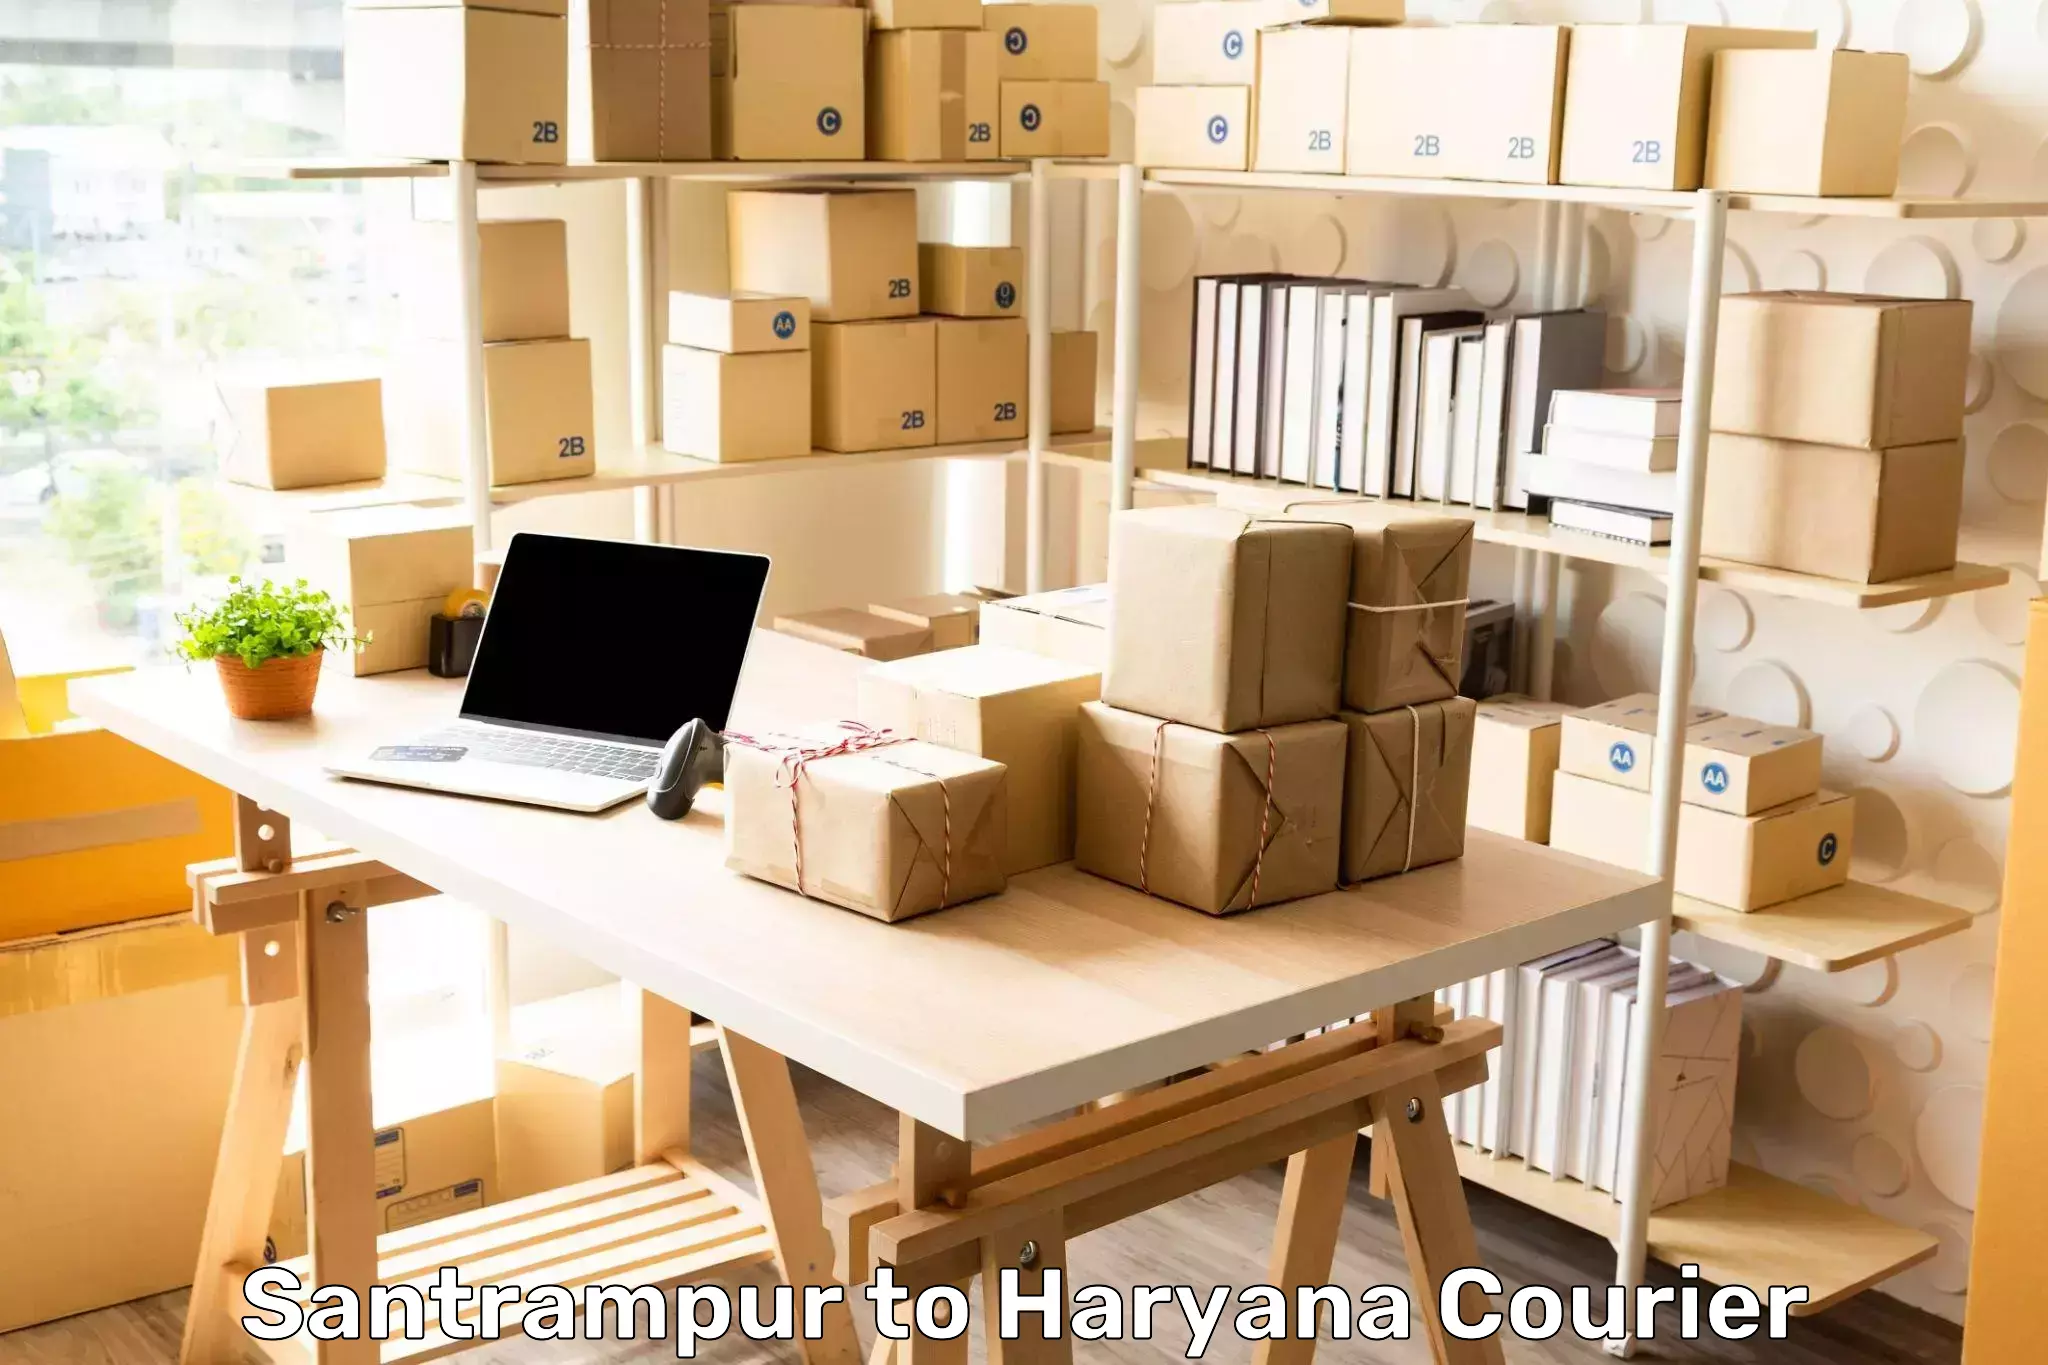 Logistics service provider Santrampur to Gurgaon